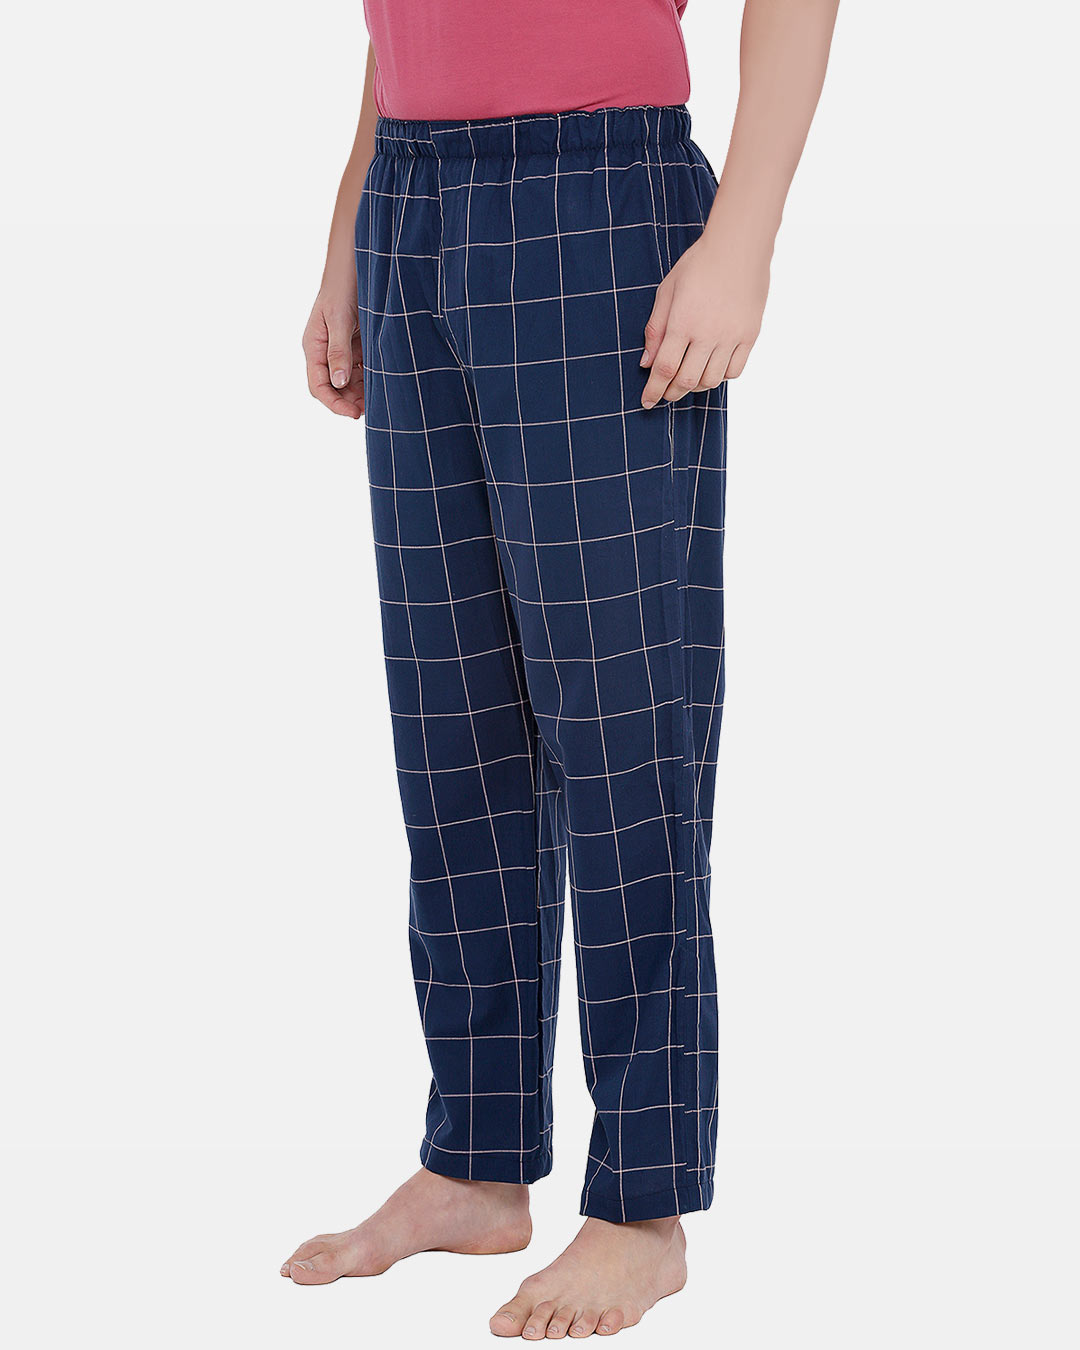 Shop Super Combed Cotton Checkered Pyjamas For Men (Pack Of 1) Pink Checks-Back